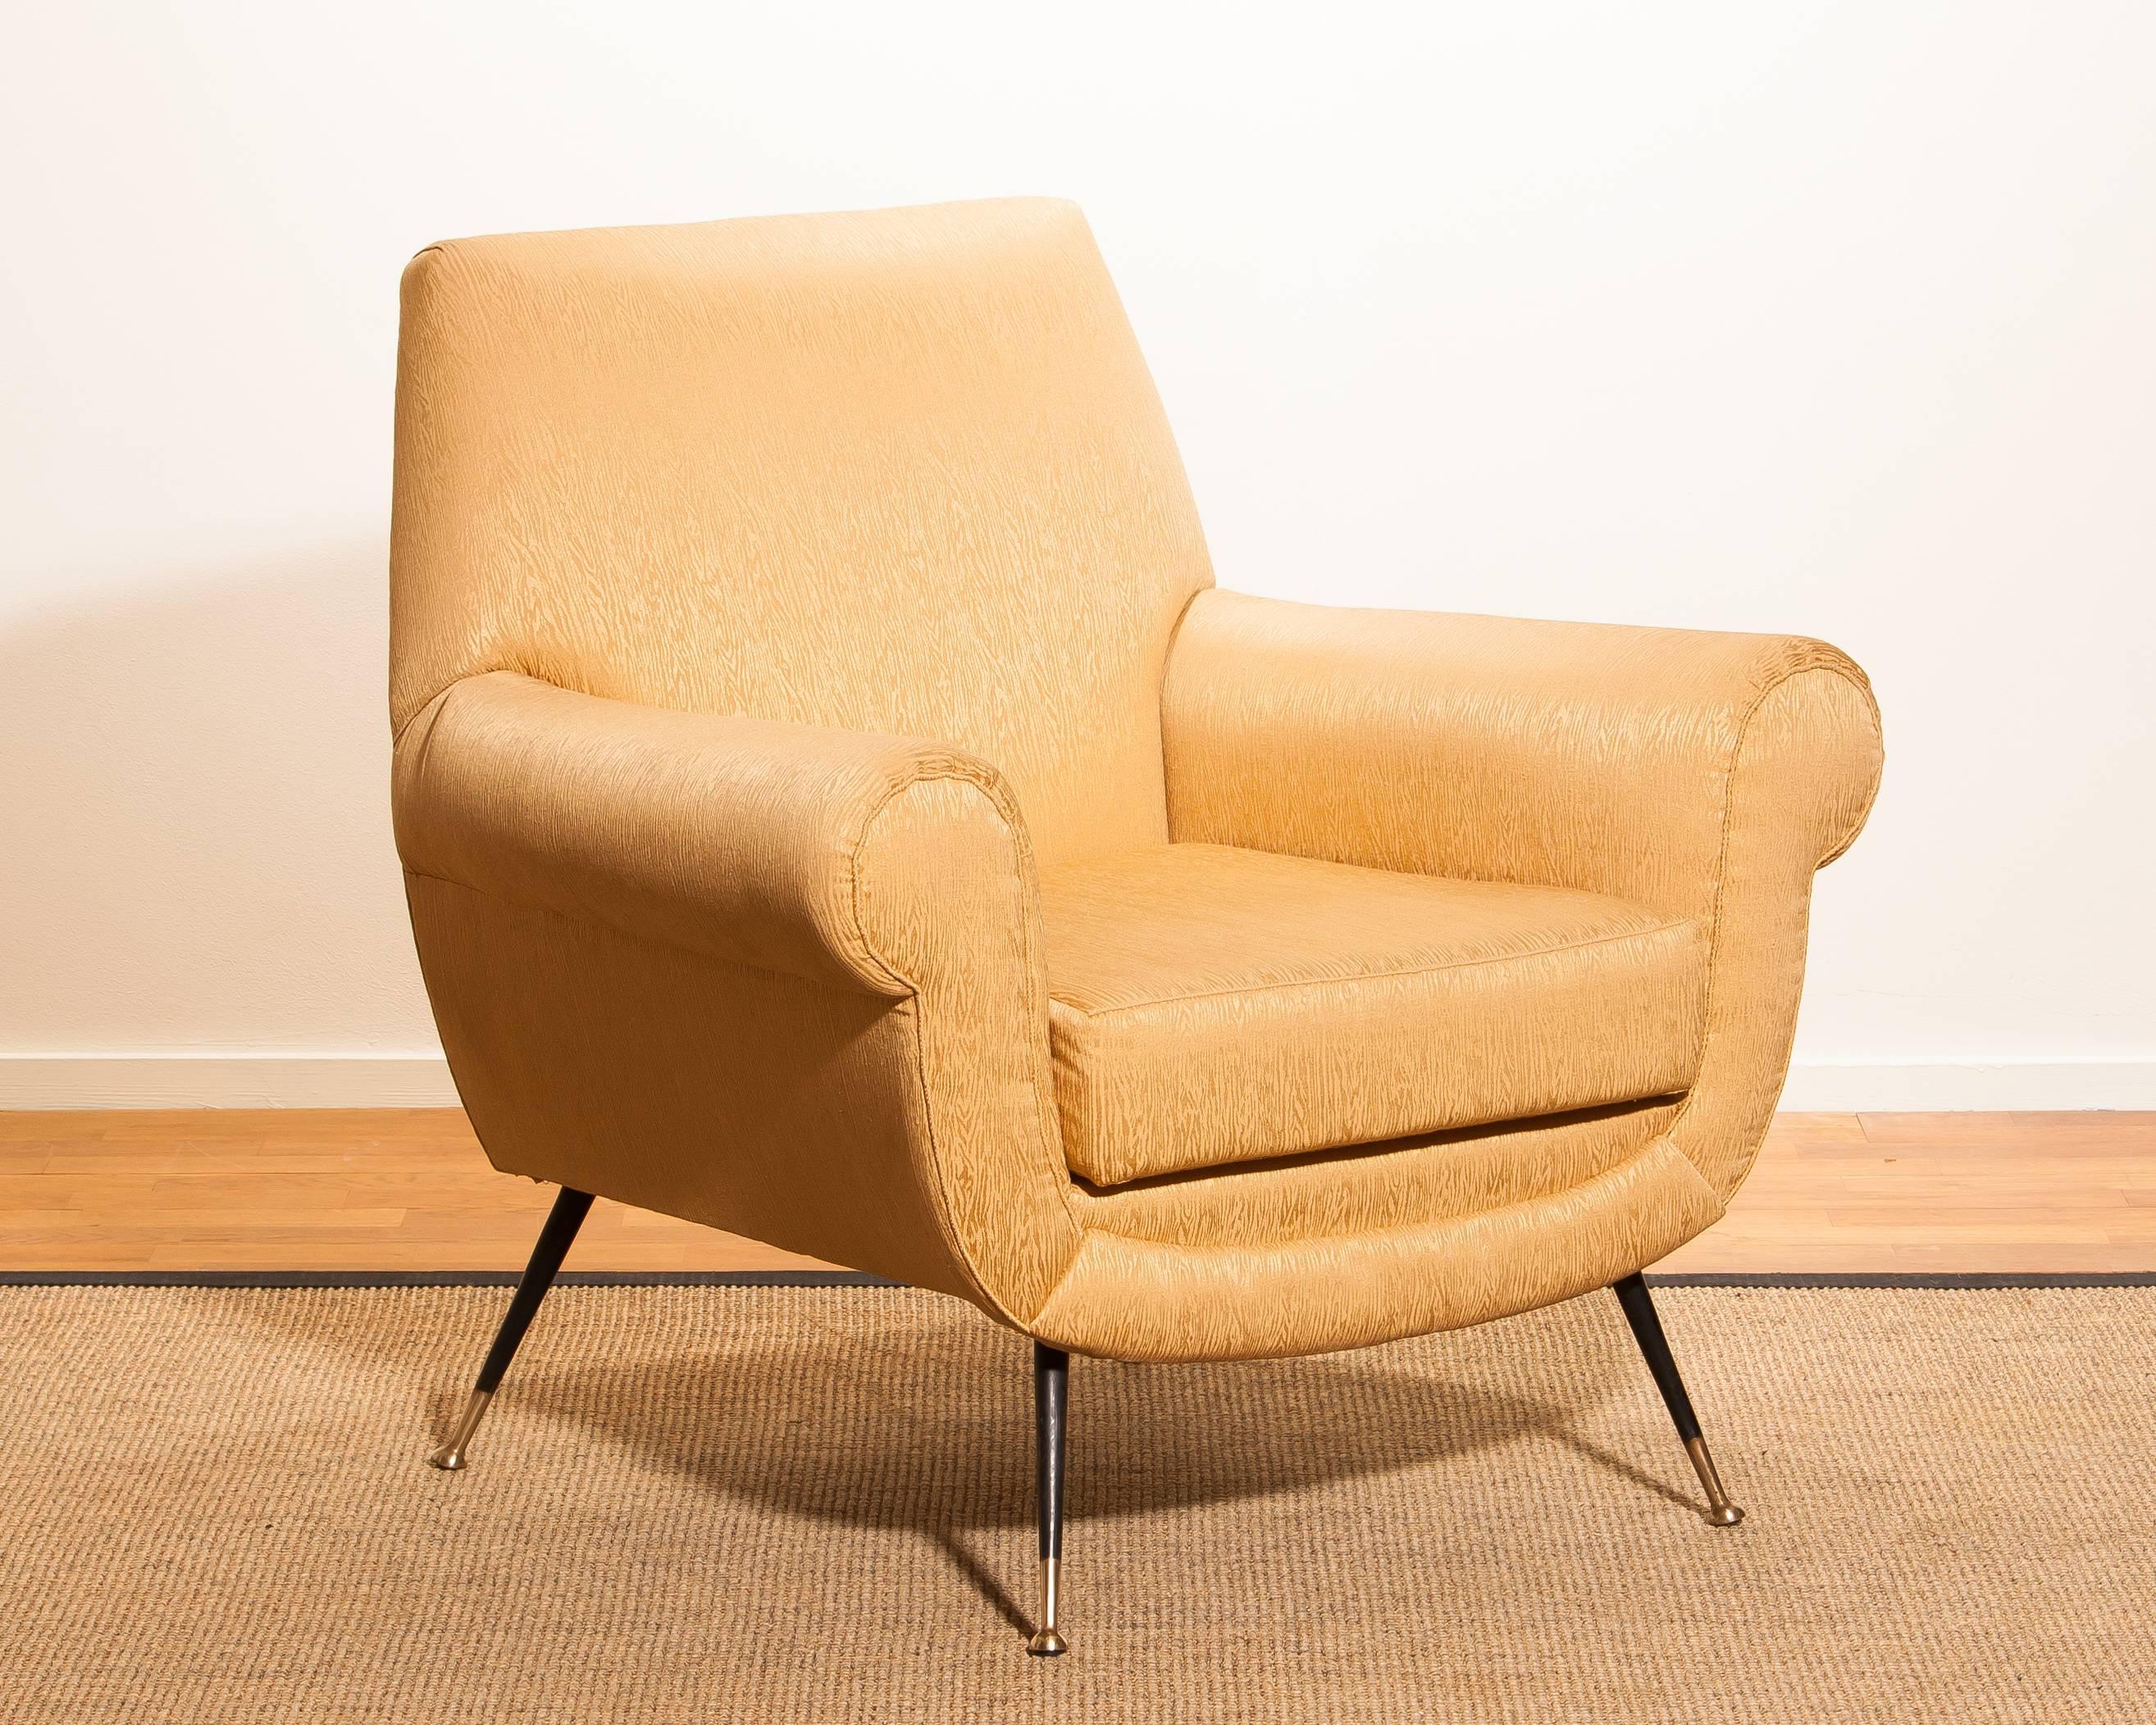 Gigi Radice for Minotti Lounge Chair, Golden Jacquard and Brass Stiletto Legs 1